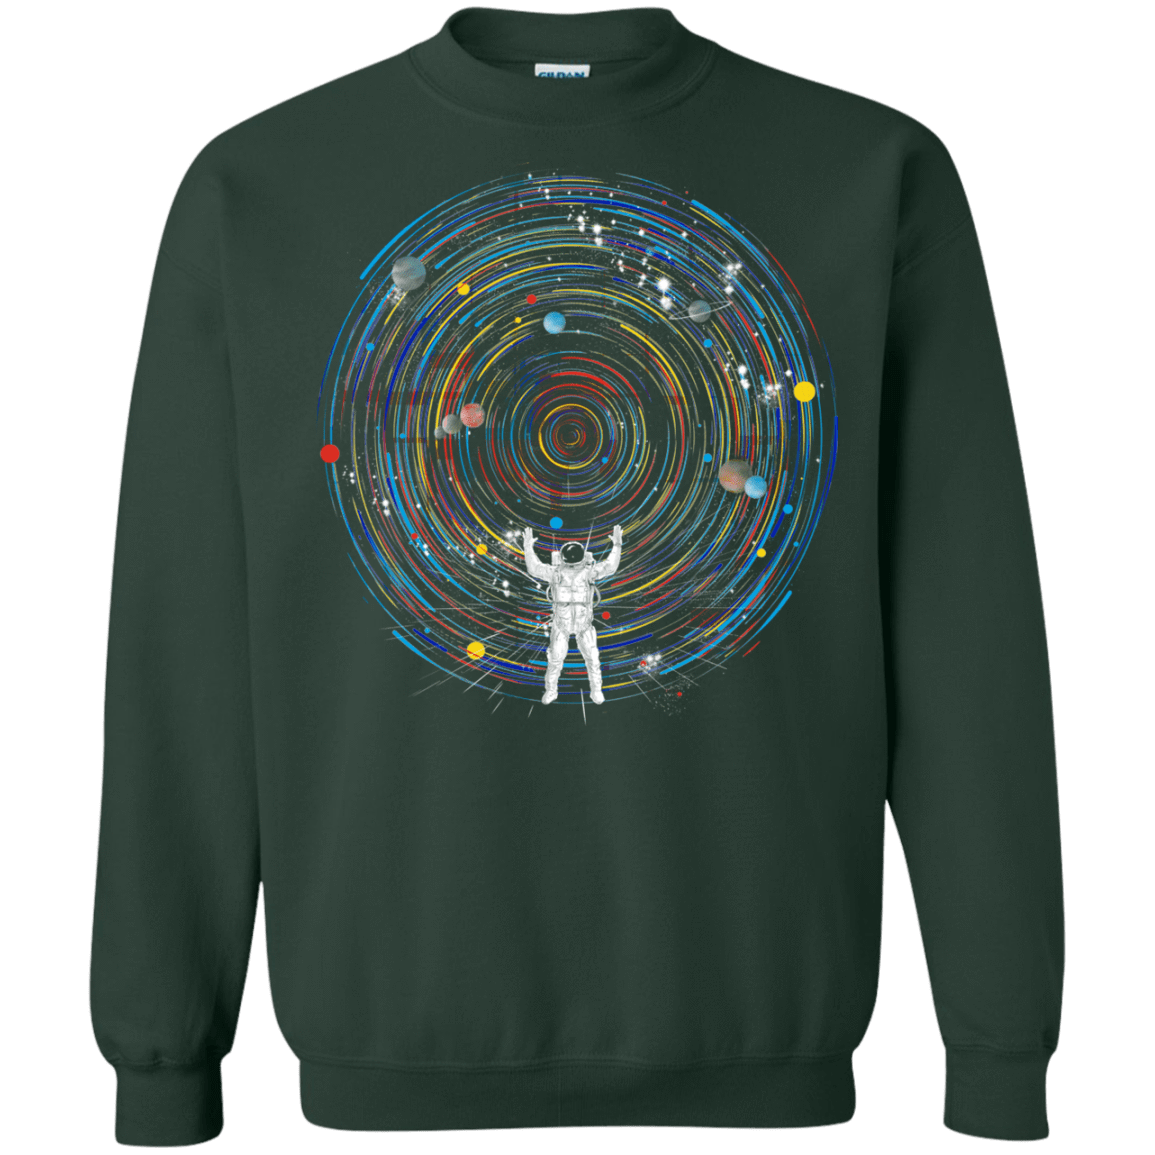 Sweatshirts Forest Green / S Space DJ Crewneck Sweatshirt